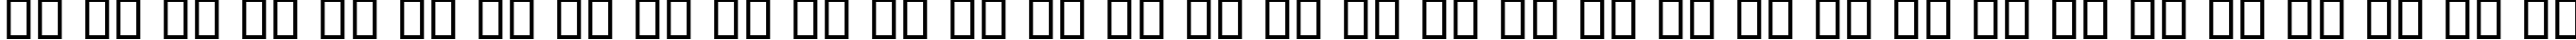 Пример написания русского алфавита шрифтом Rage Italic